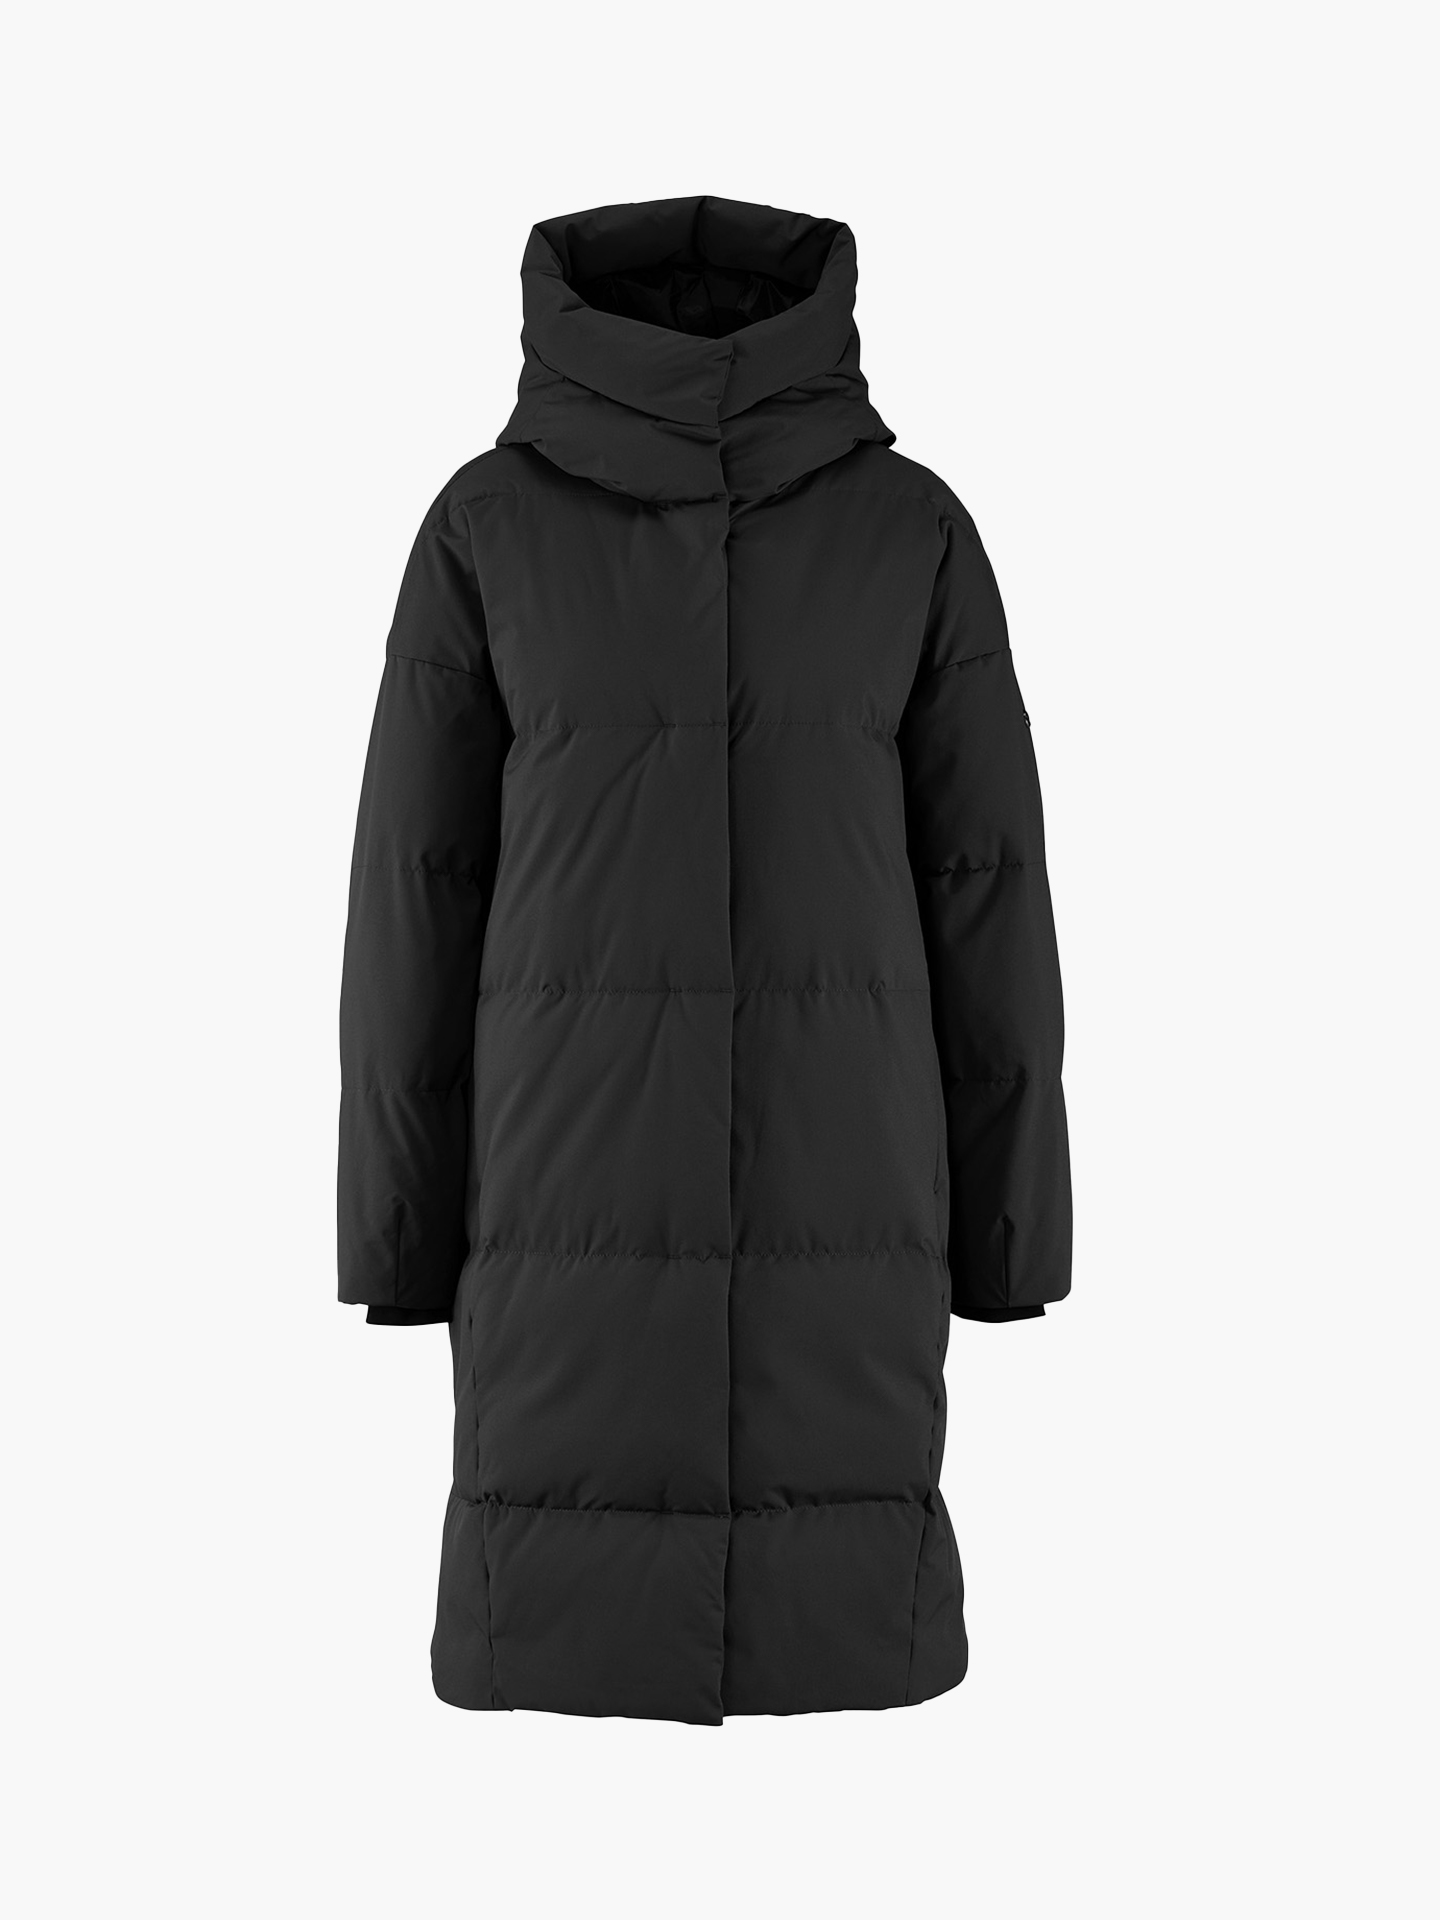 6015/M Куртка Scandinavian Edition Swell цвет Onyx размер M